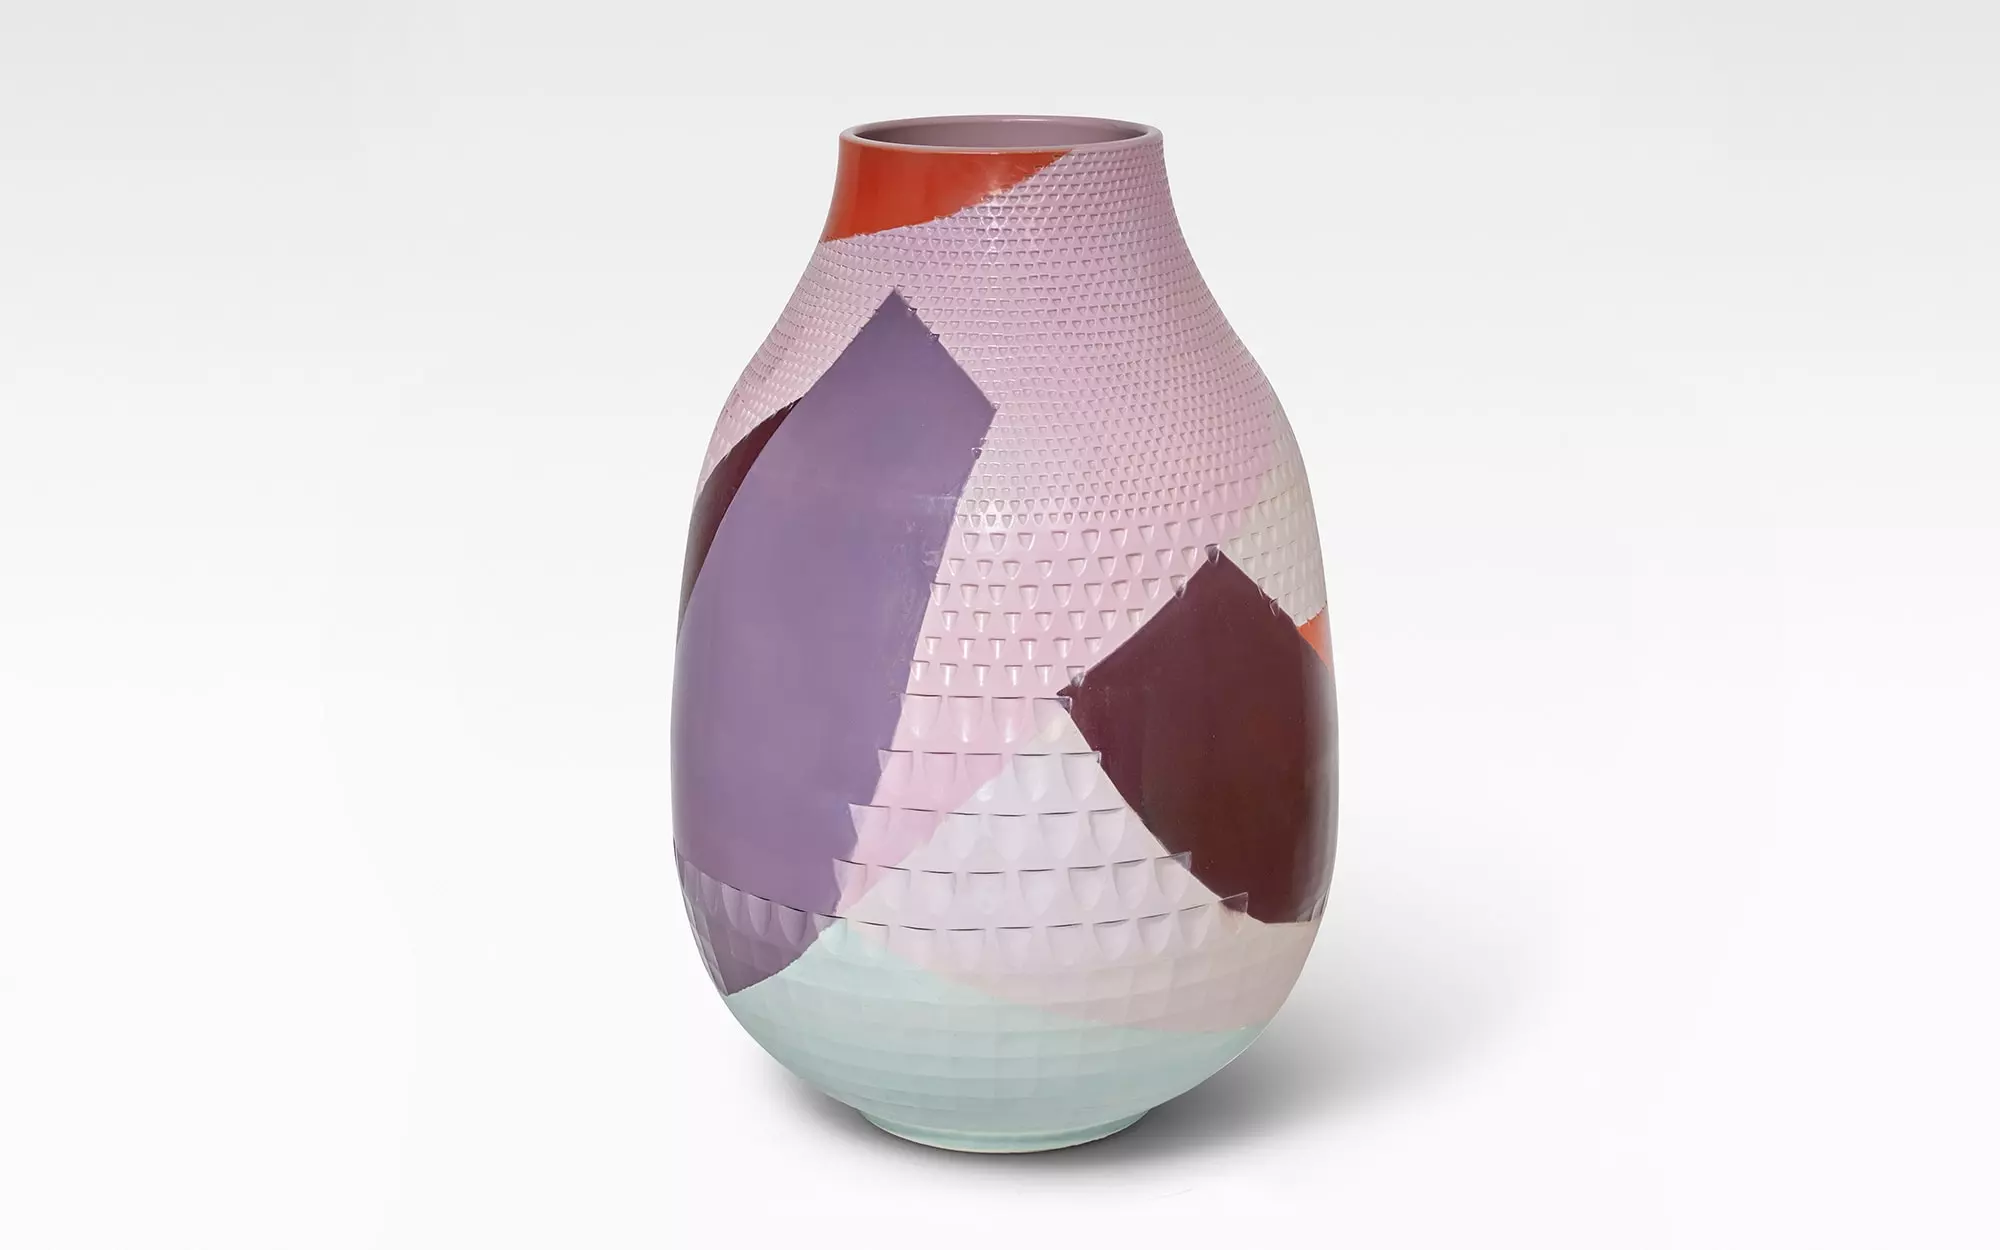 Diamond Vase - Day - Hella Jongerius - Lucas Ratton x kamel mennour x Galerie kreo x Jacques Lacoste in Saint-Tropez.